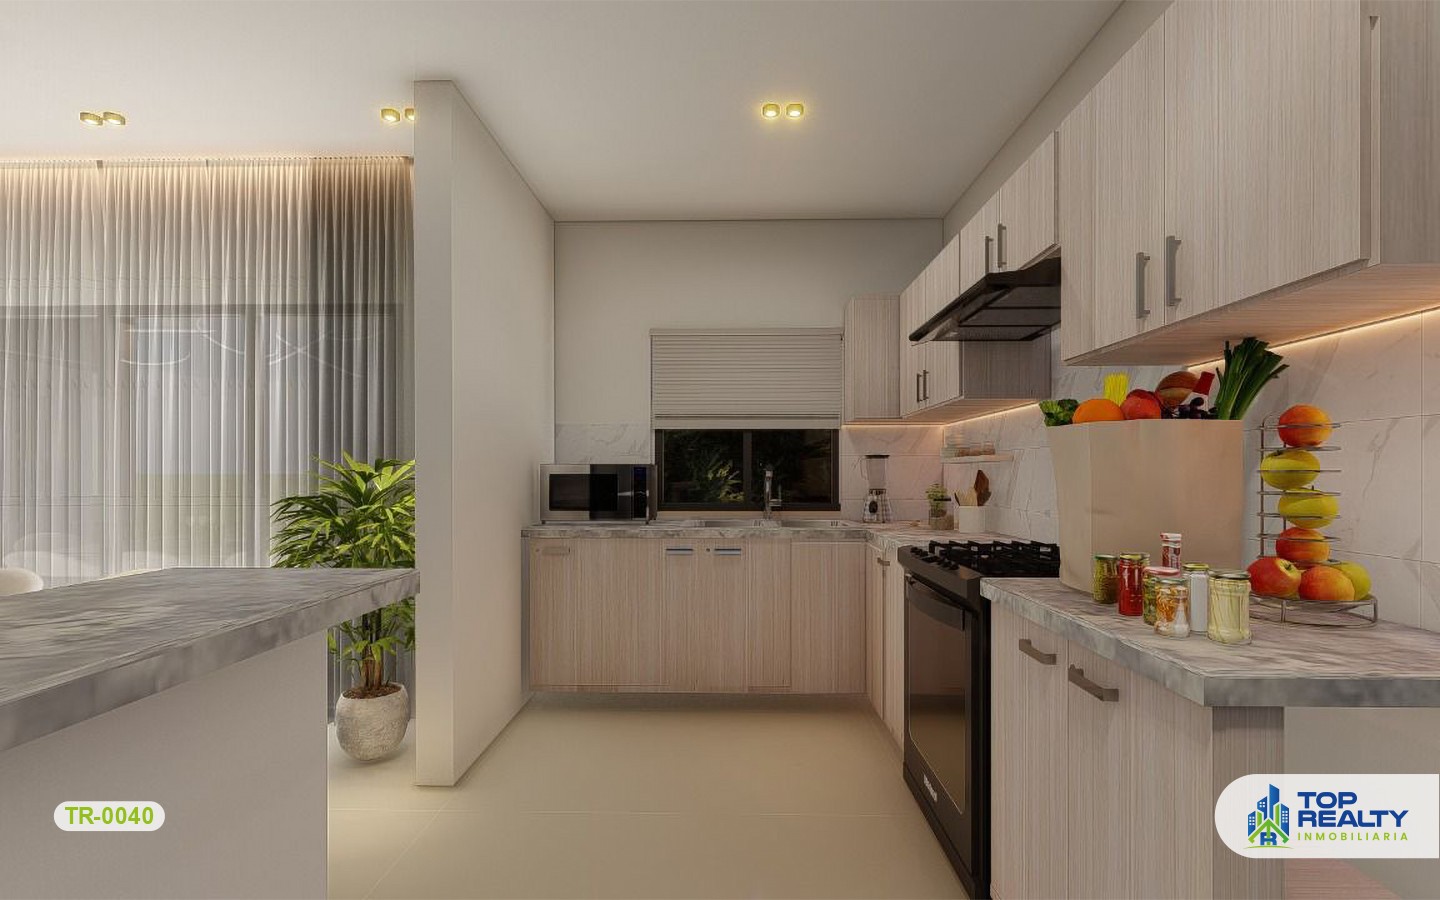 apartamentos - TR-0040: ¡Proyecto único! Casas en tres niveles con distribución excelente. 8